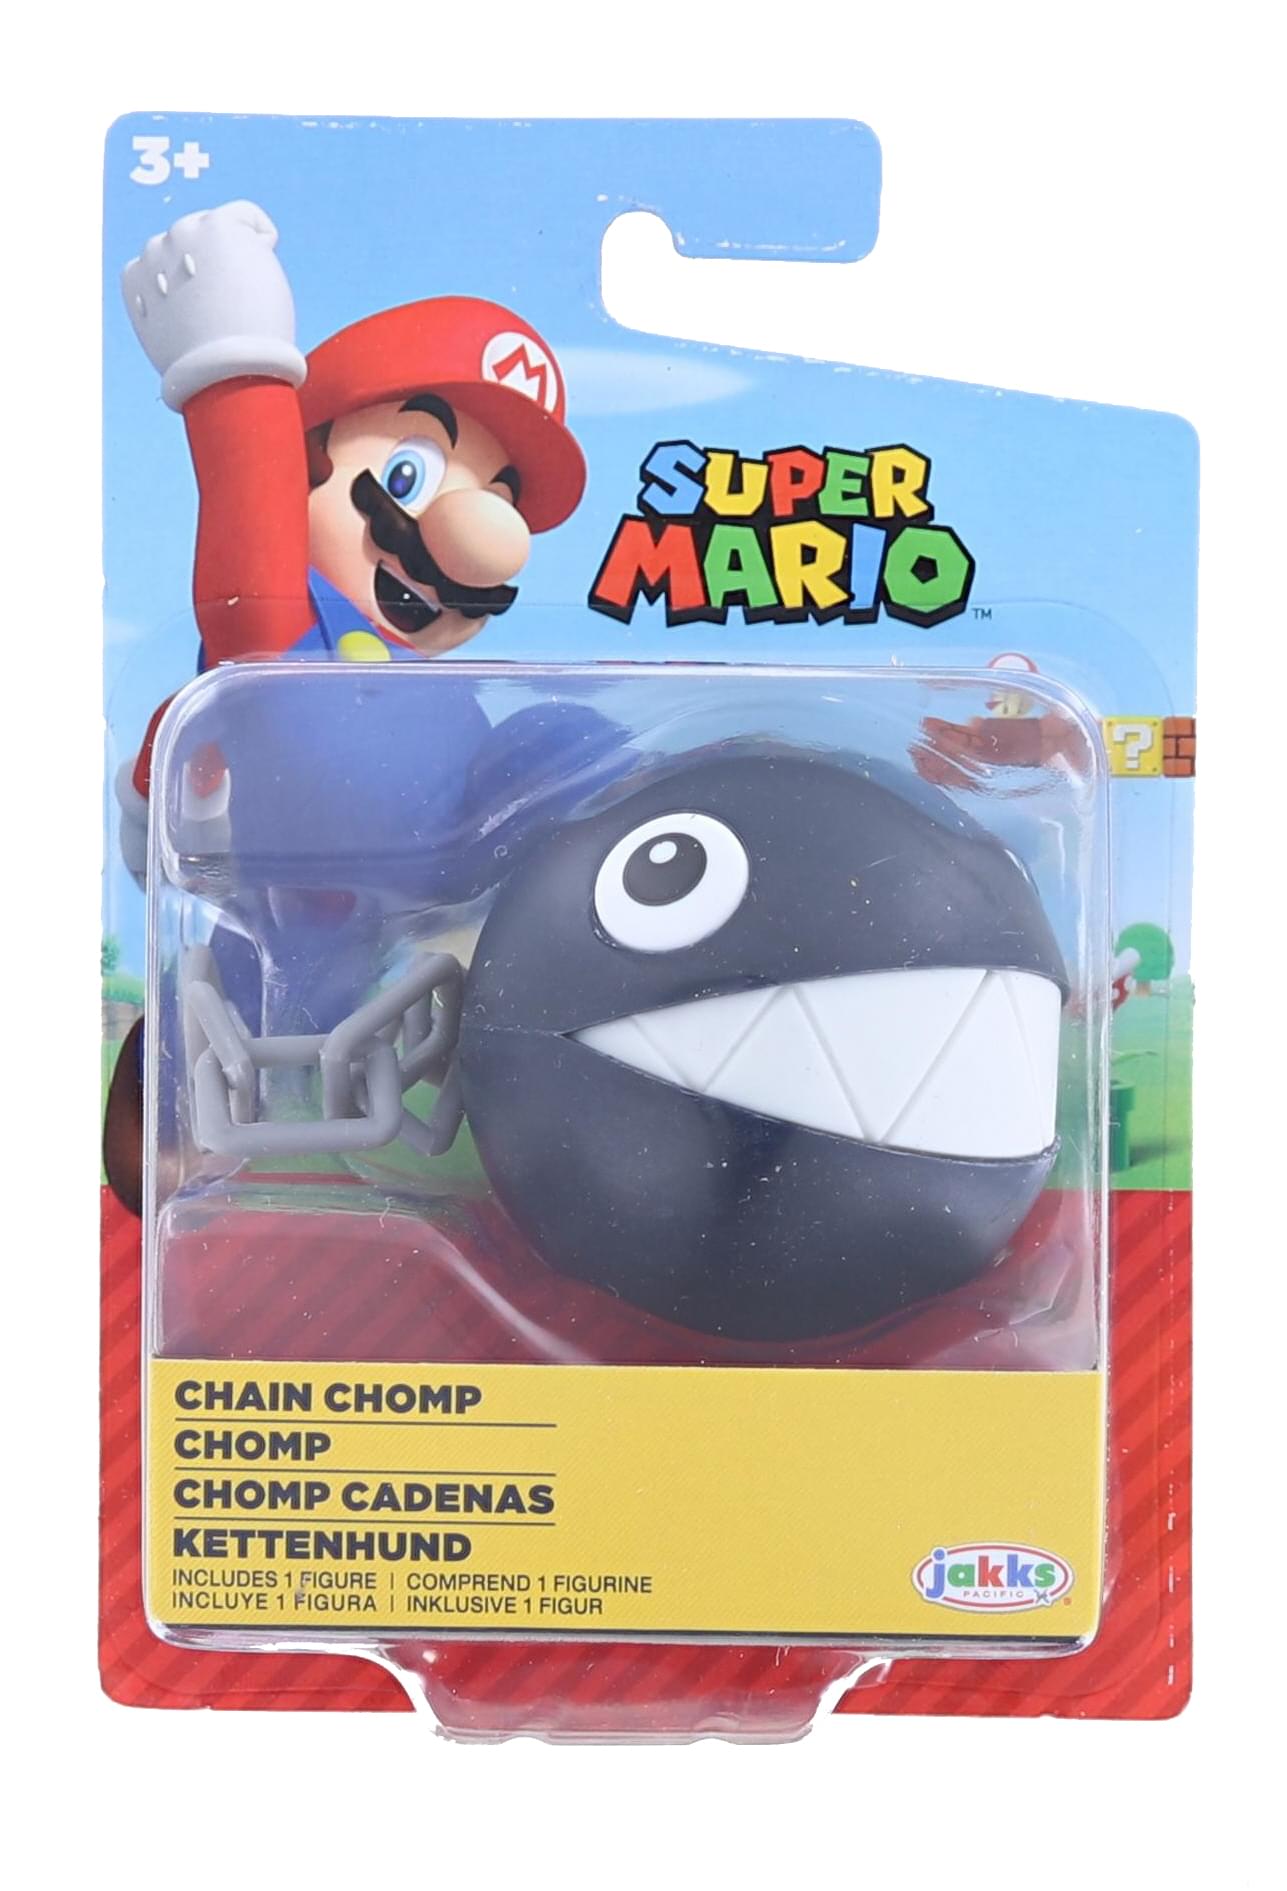 Super Mario World of Nintendo 2.5 Inch Figure | Chain Chomp